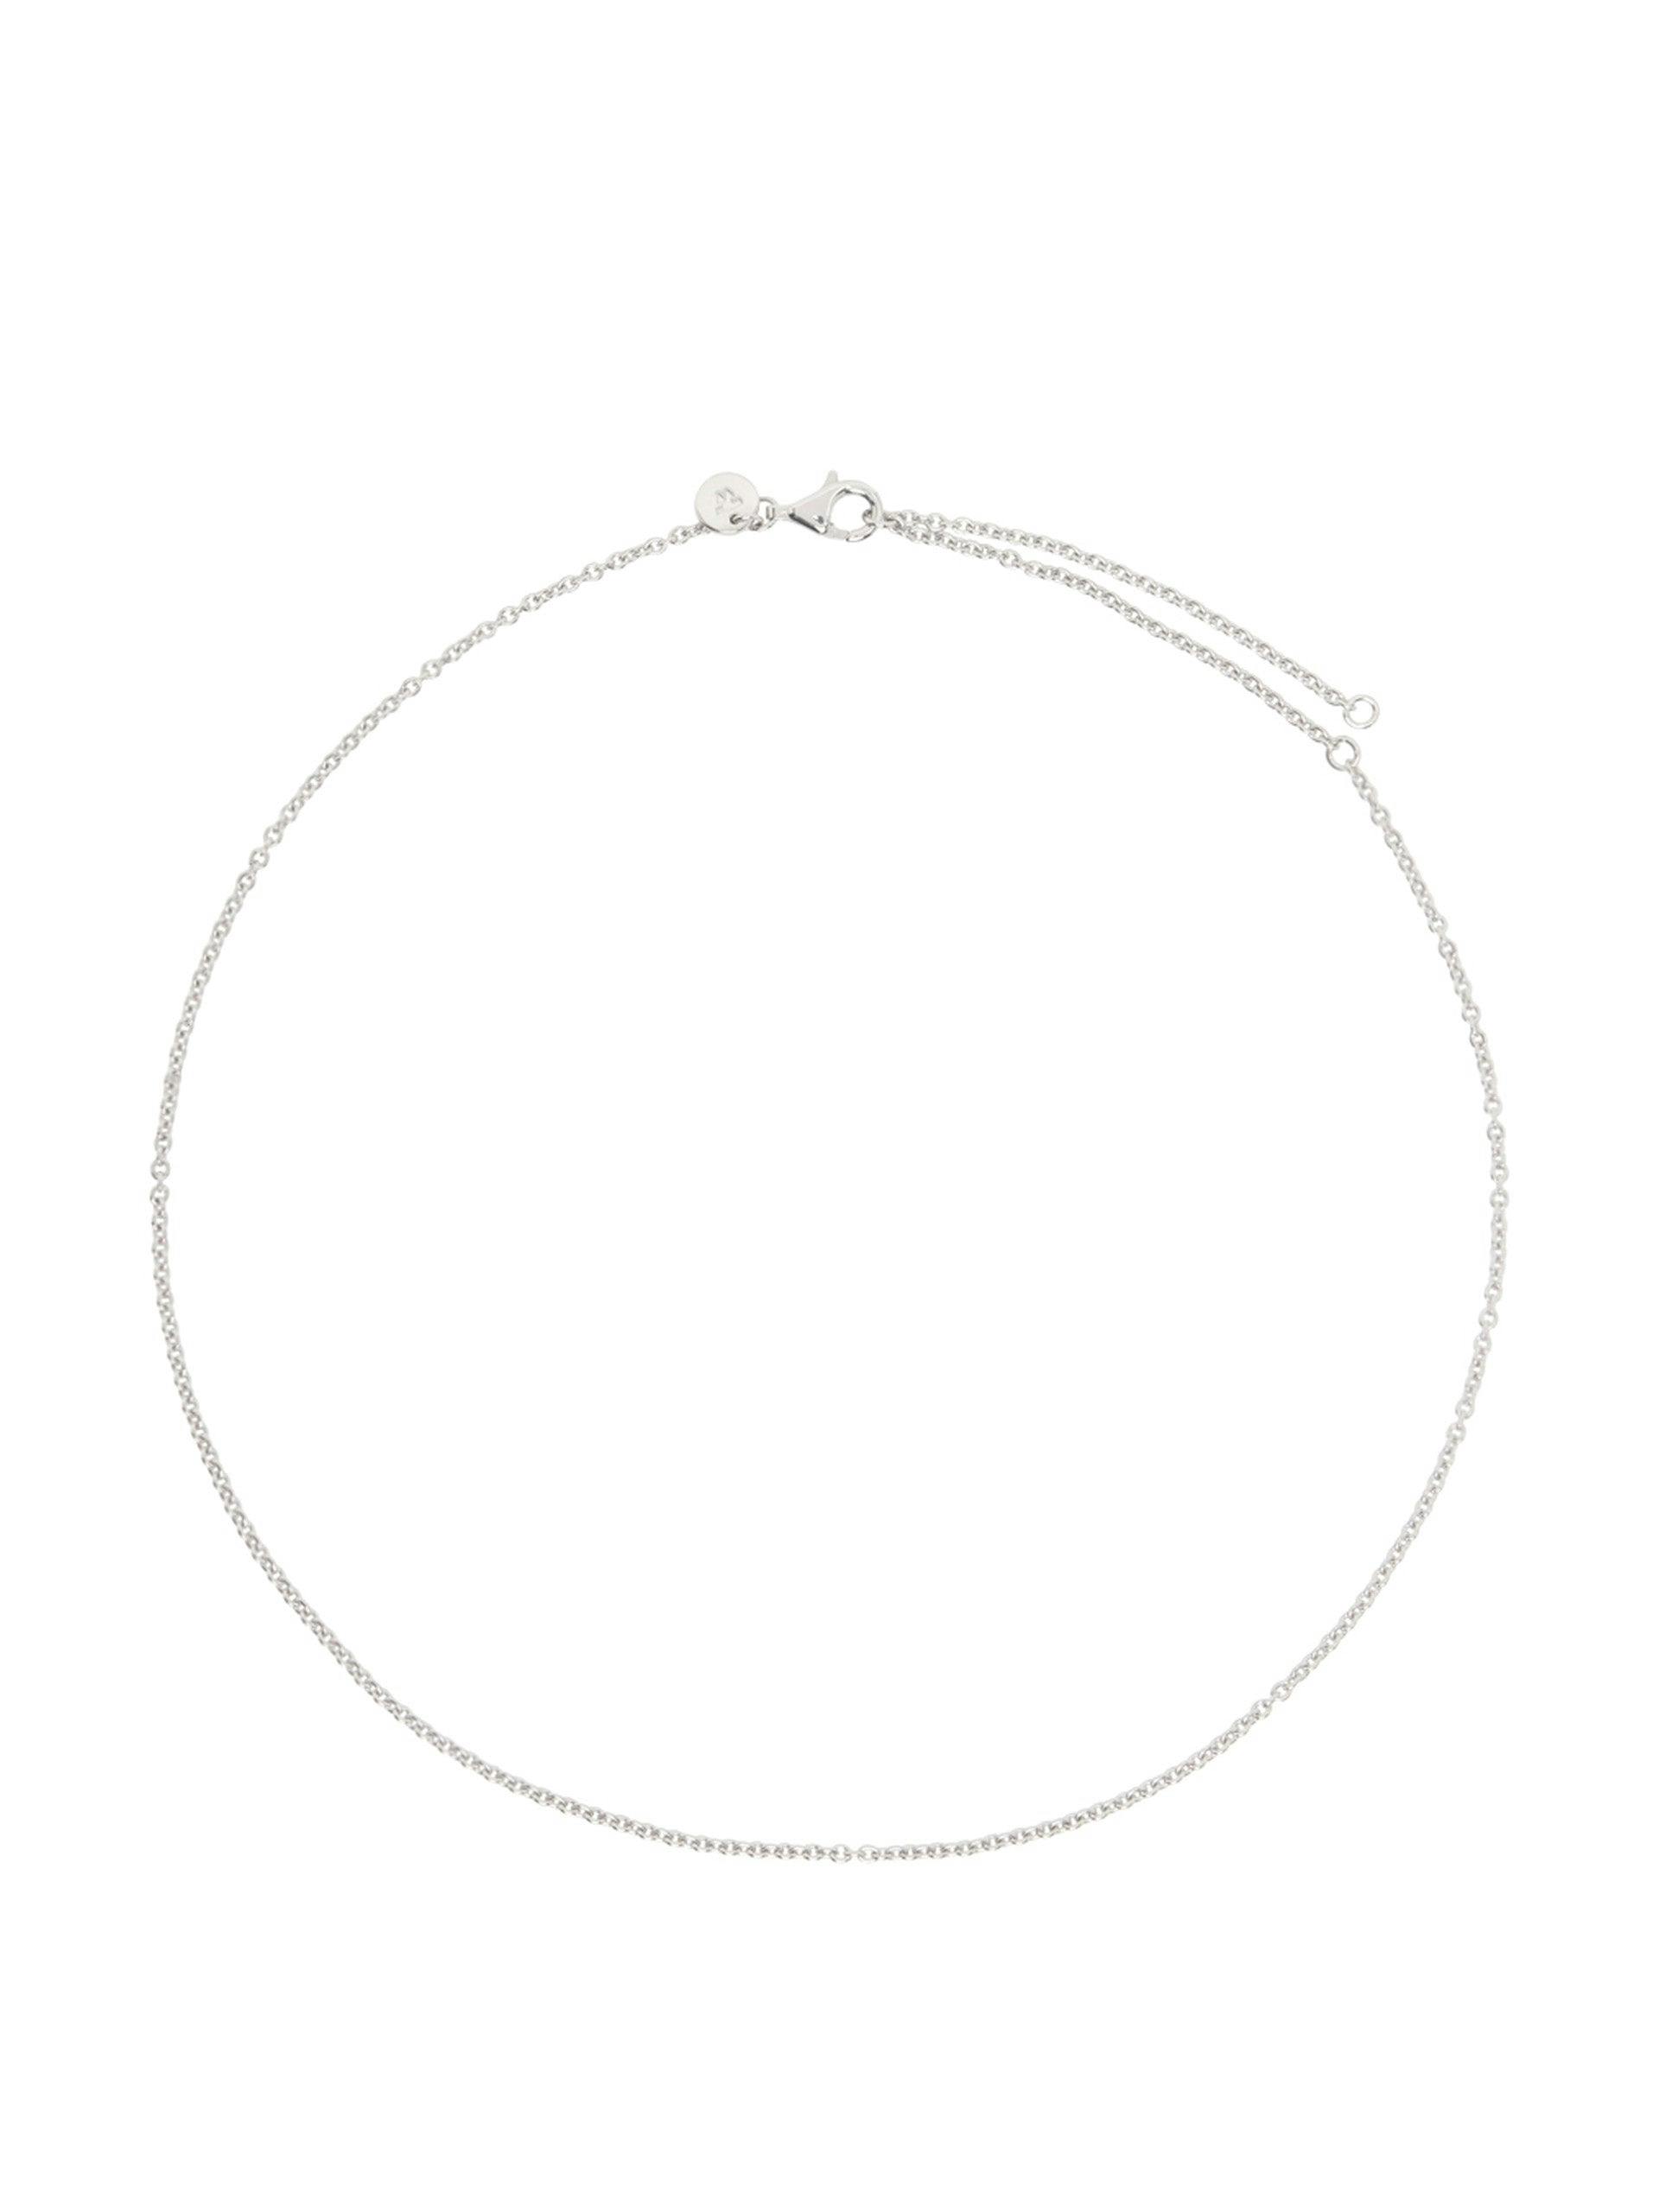 Silver rolo chain necklace